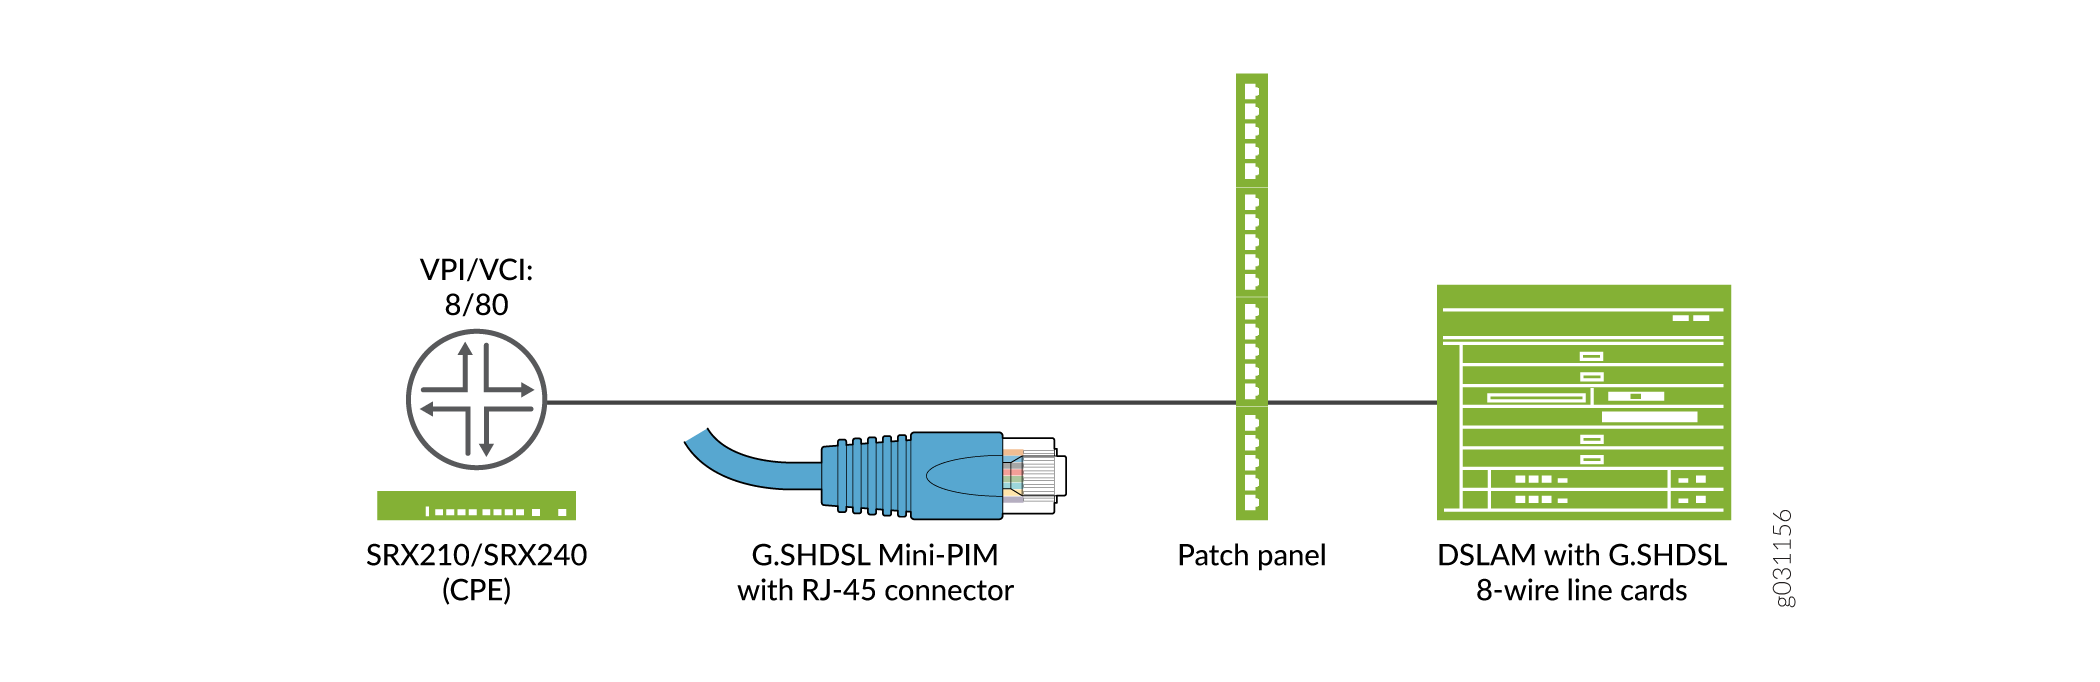 G.SHDSL Mini-PIM Operating in 1X8-Wire Mode